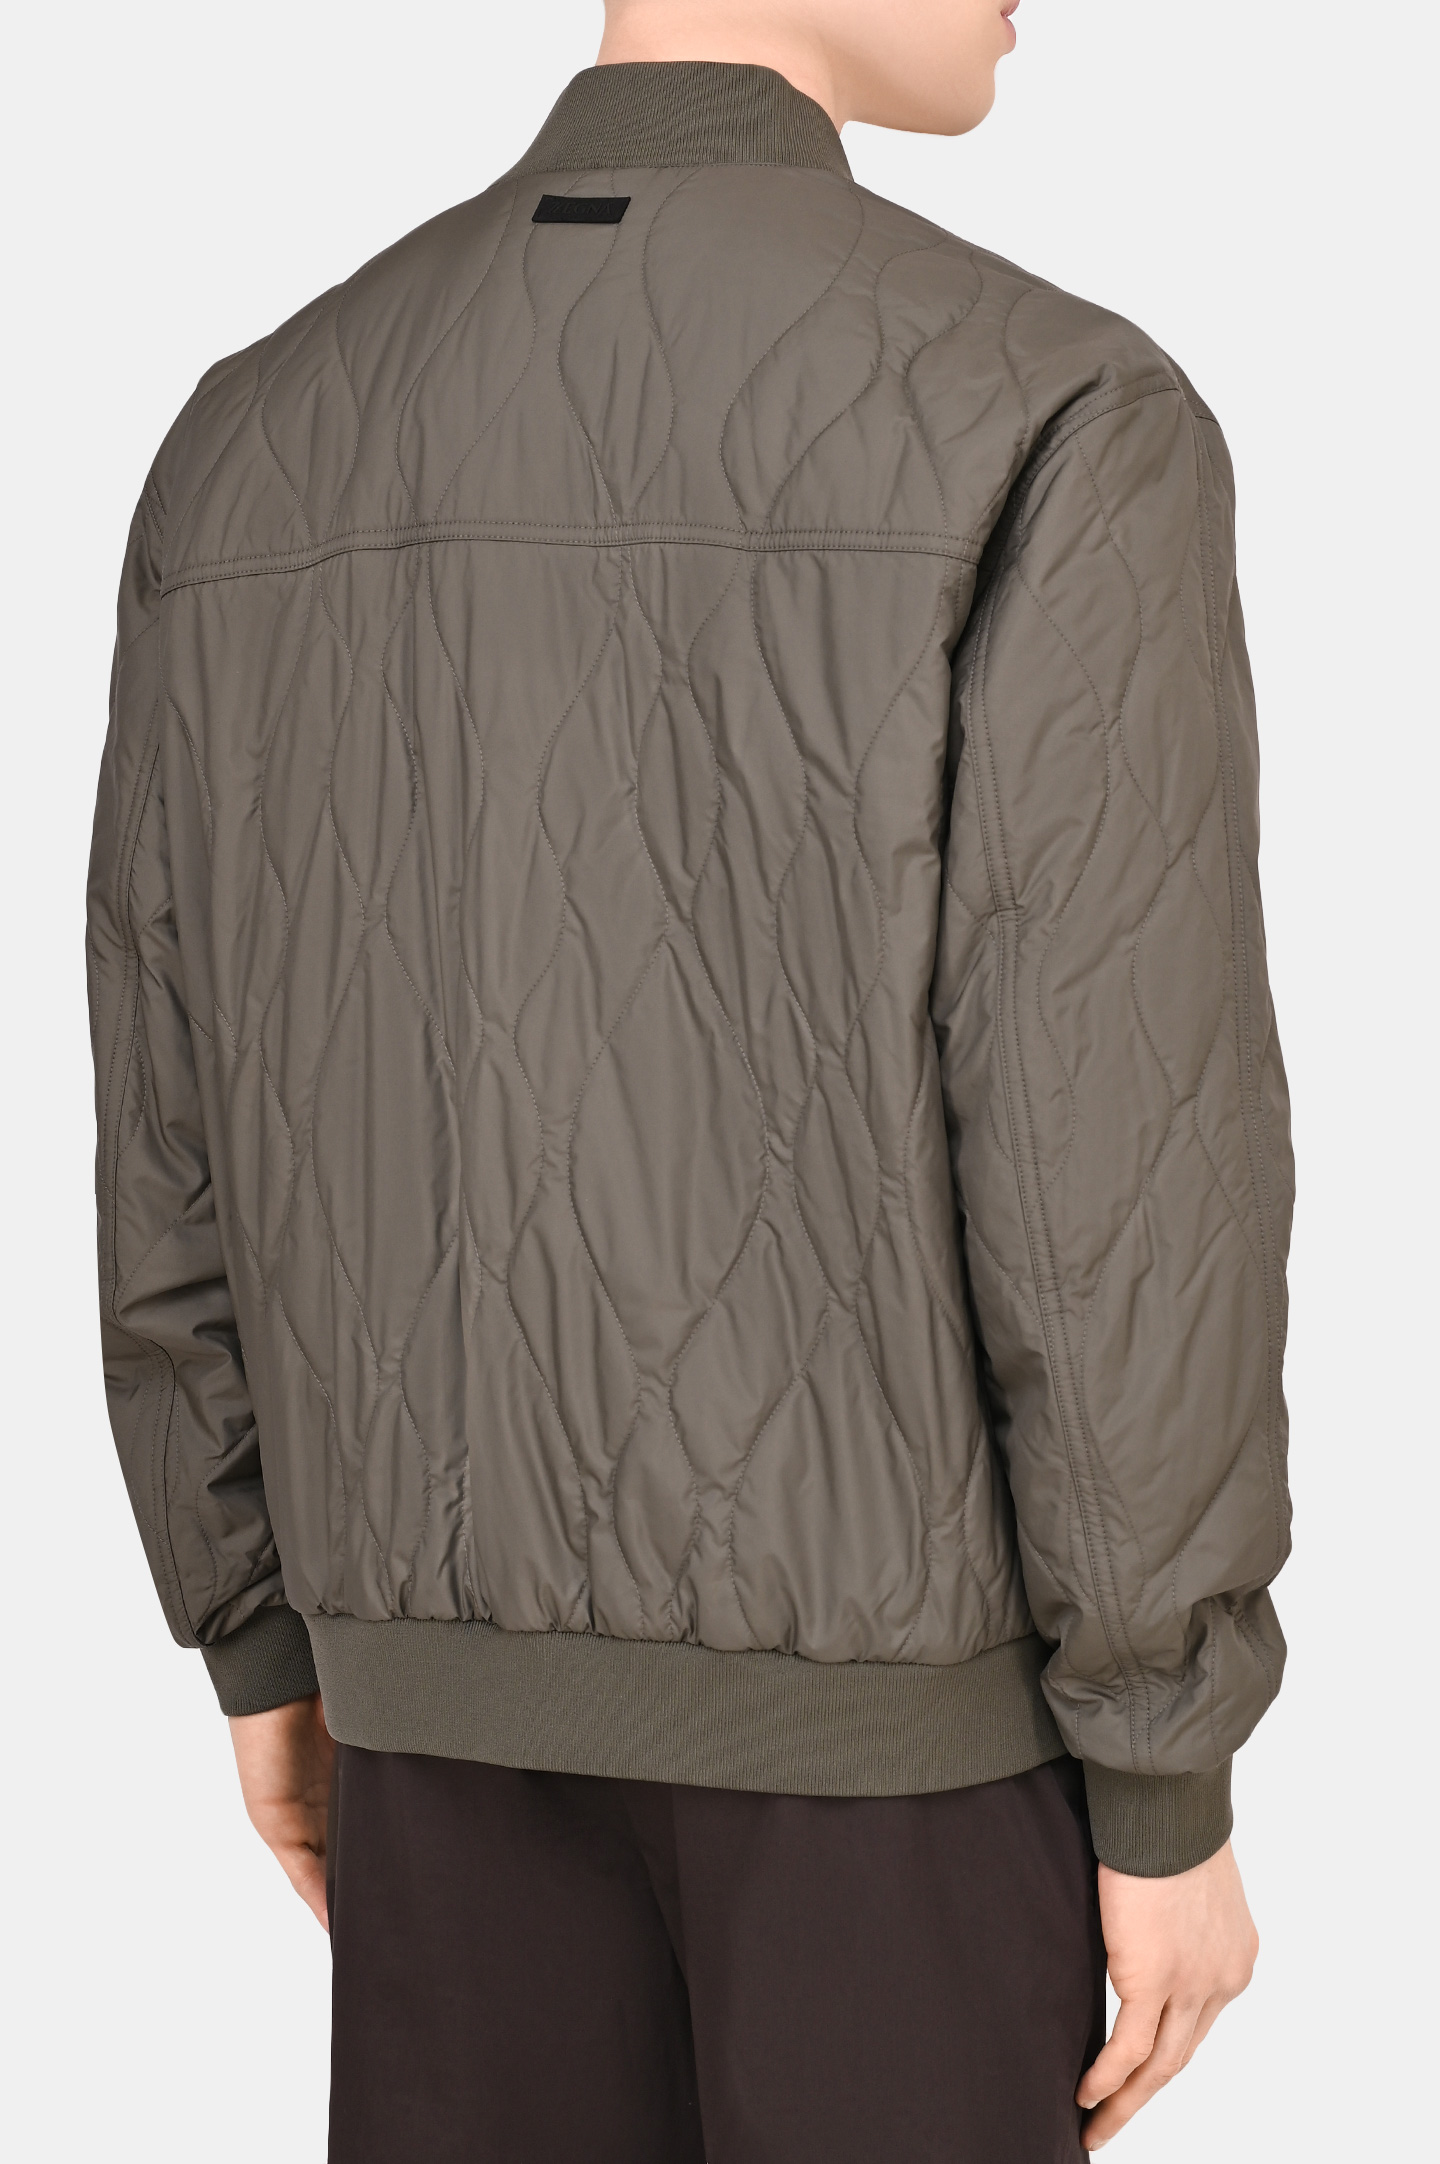 Куртка Z ZEGNA VZ023 ZZ020/1, цвет: Серый, Мужской